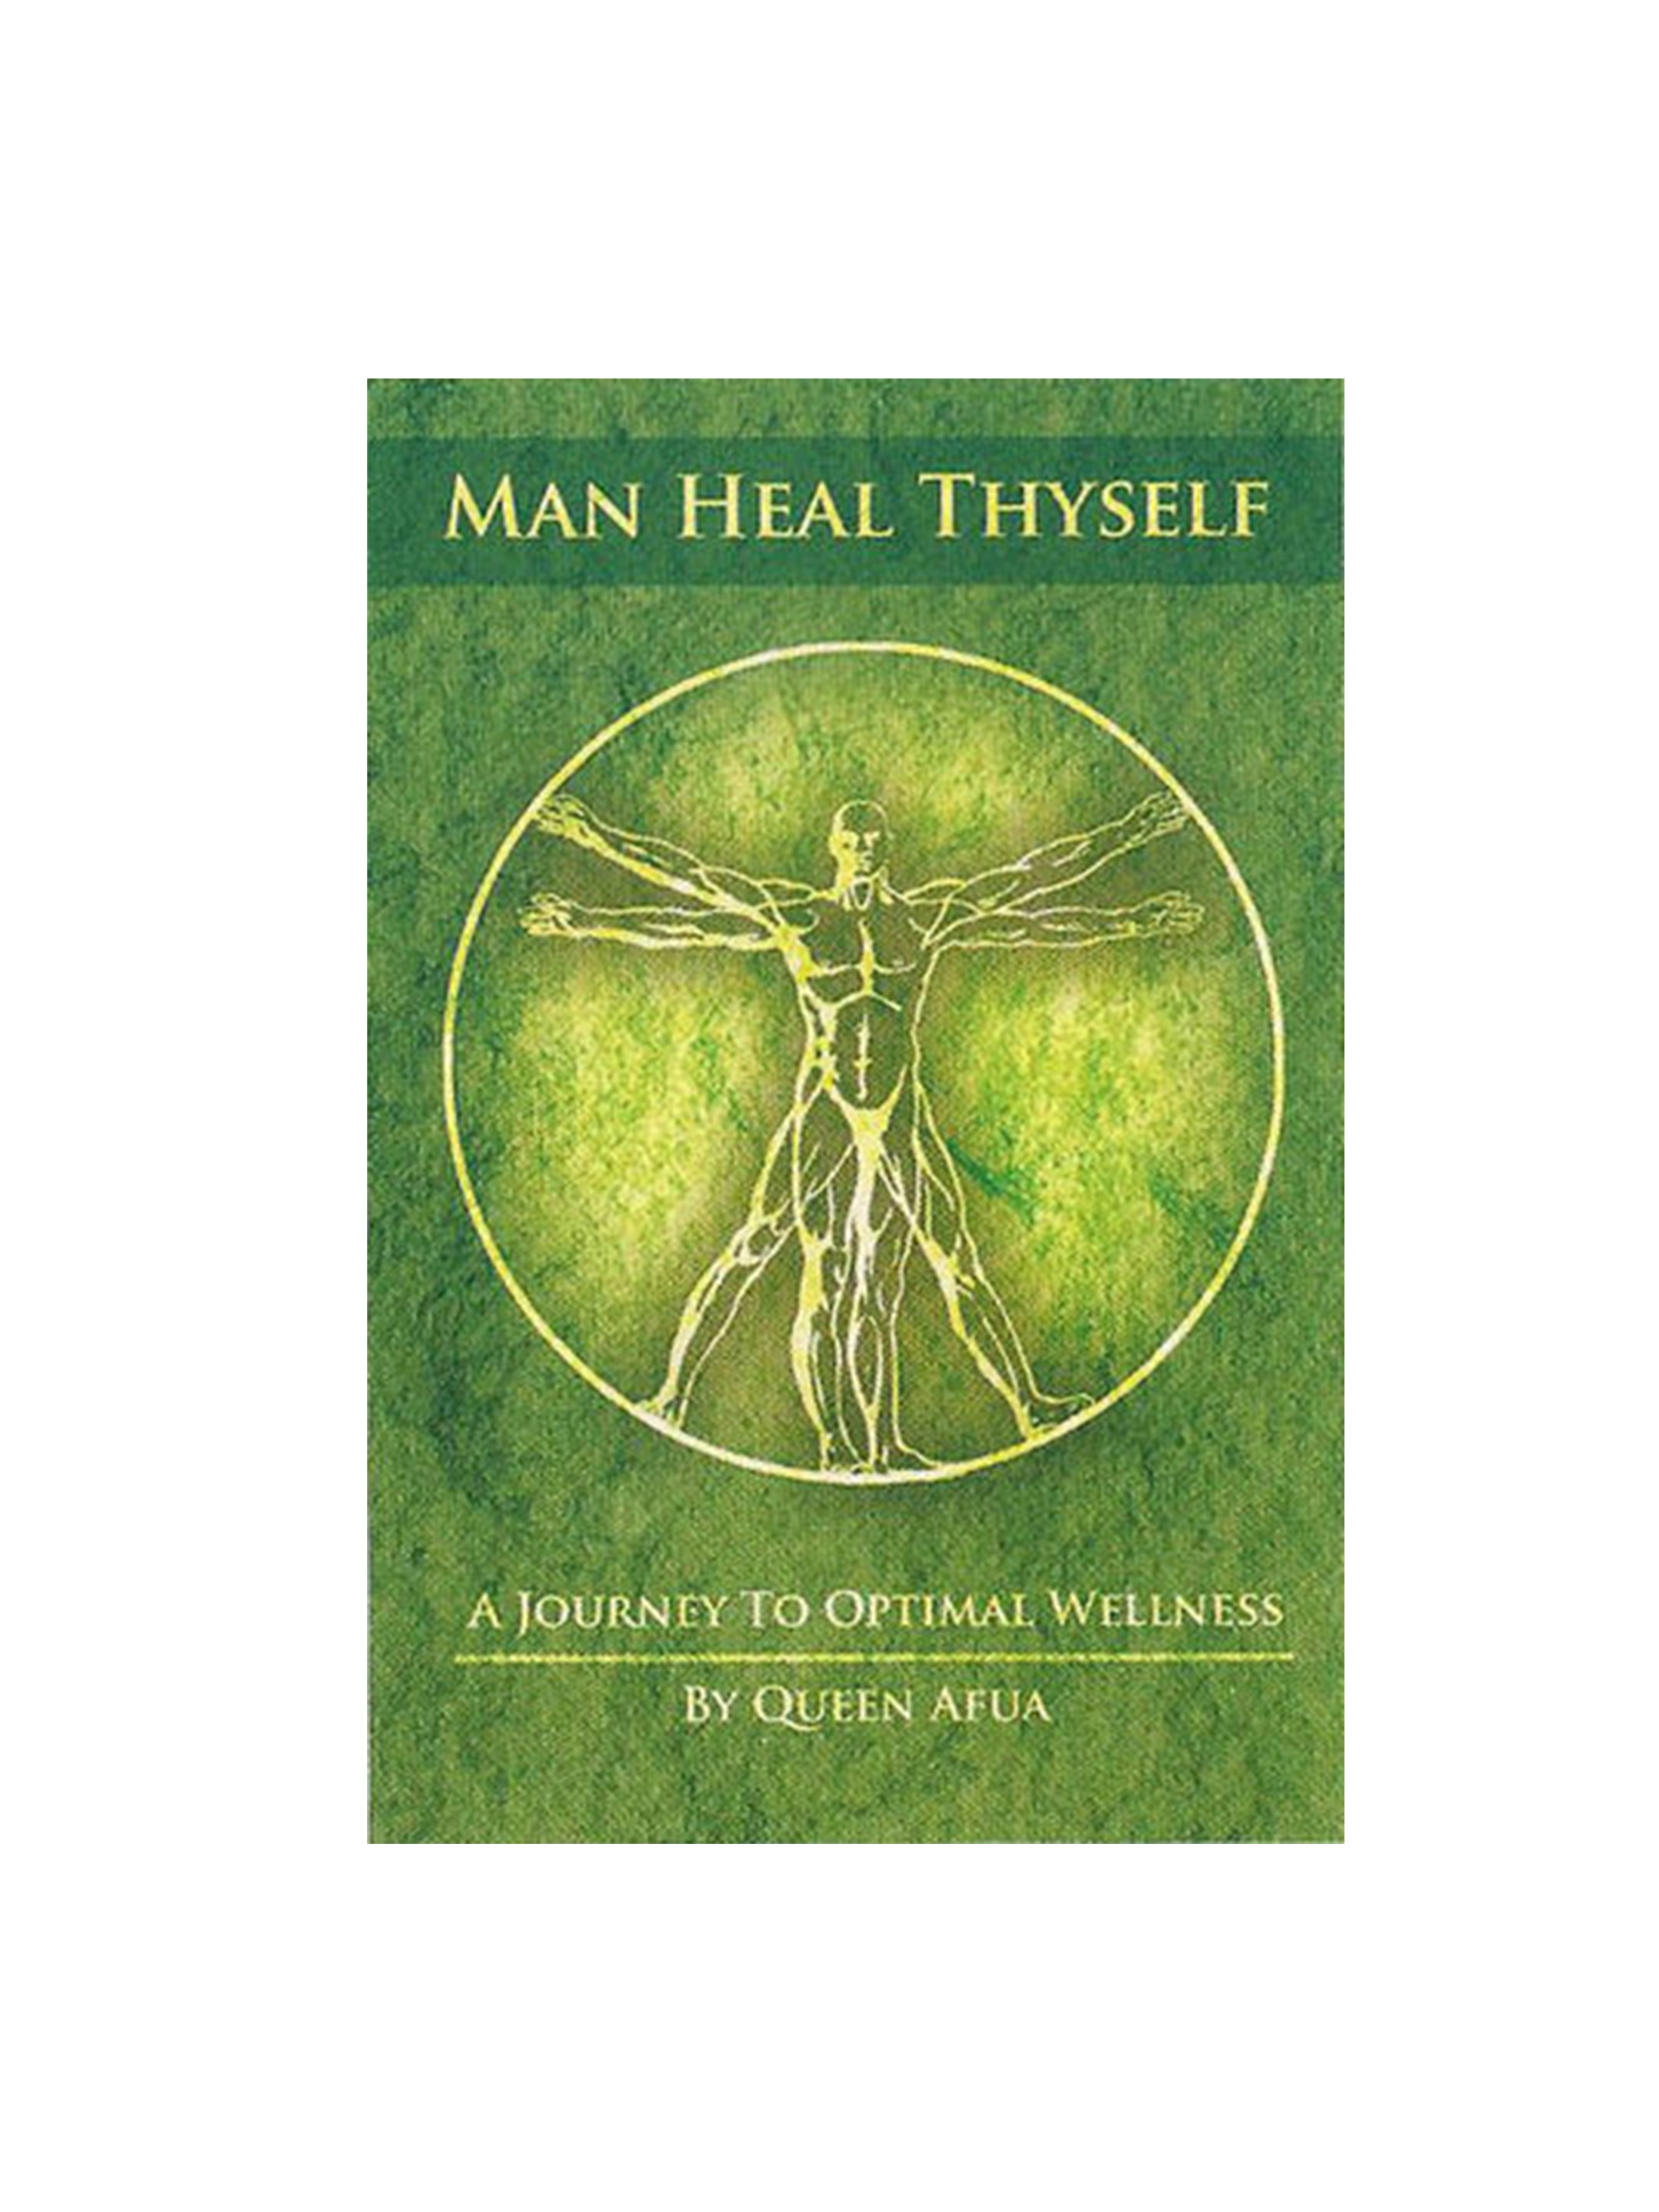 Image of book man heal thyself